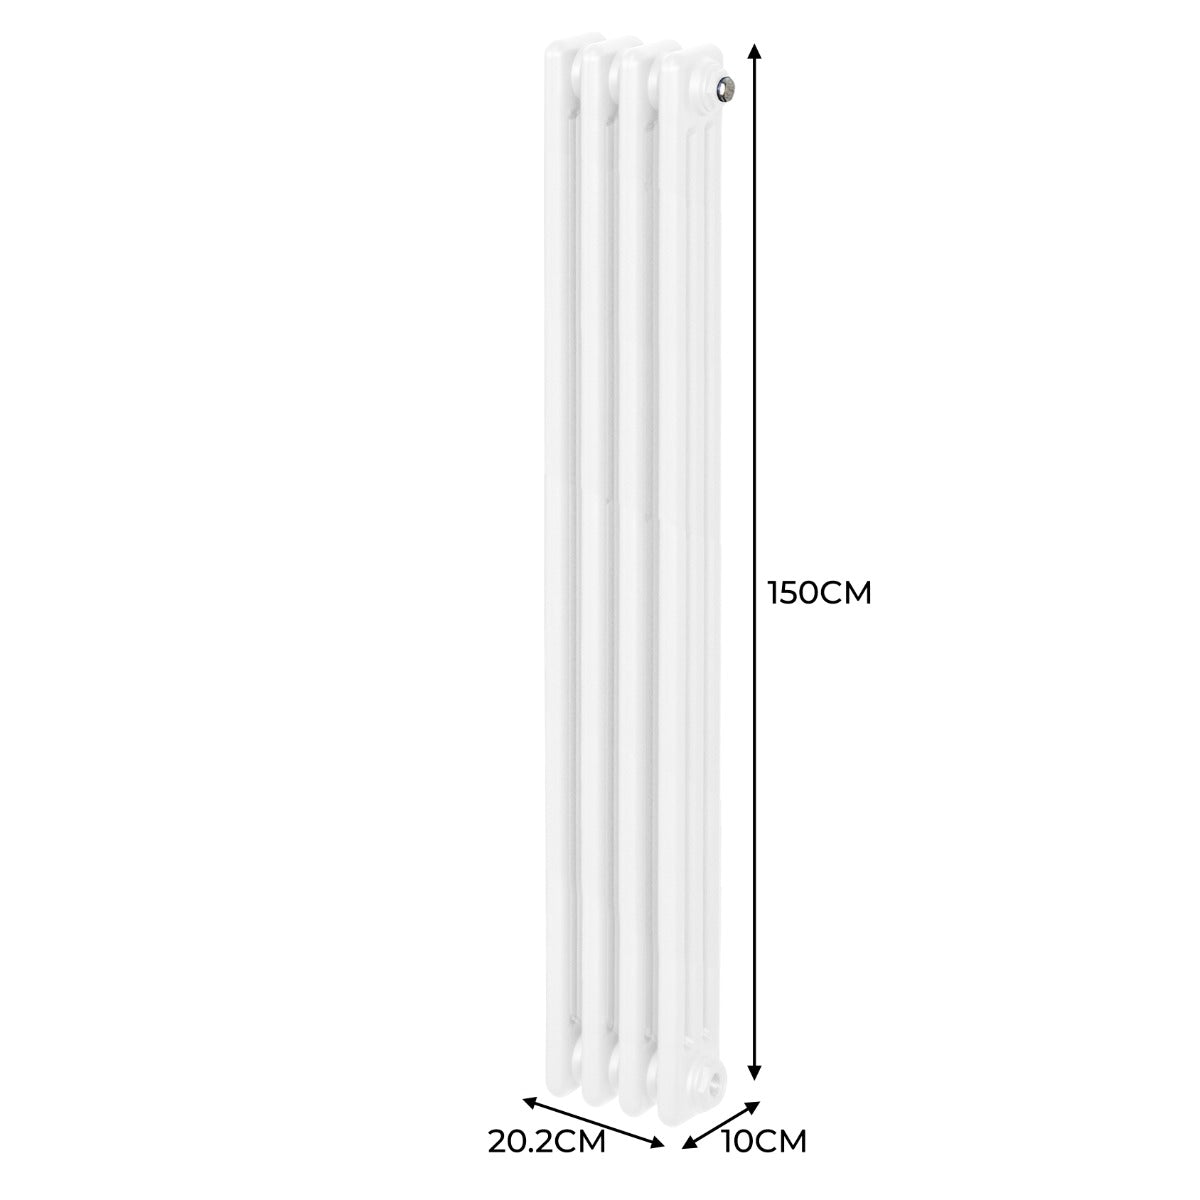 Radiatore Termosifone a 3 colonne - 1500 x 202mm - Bianco